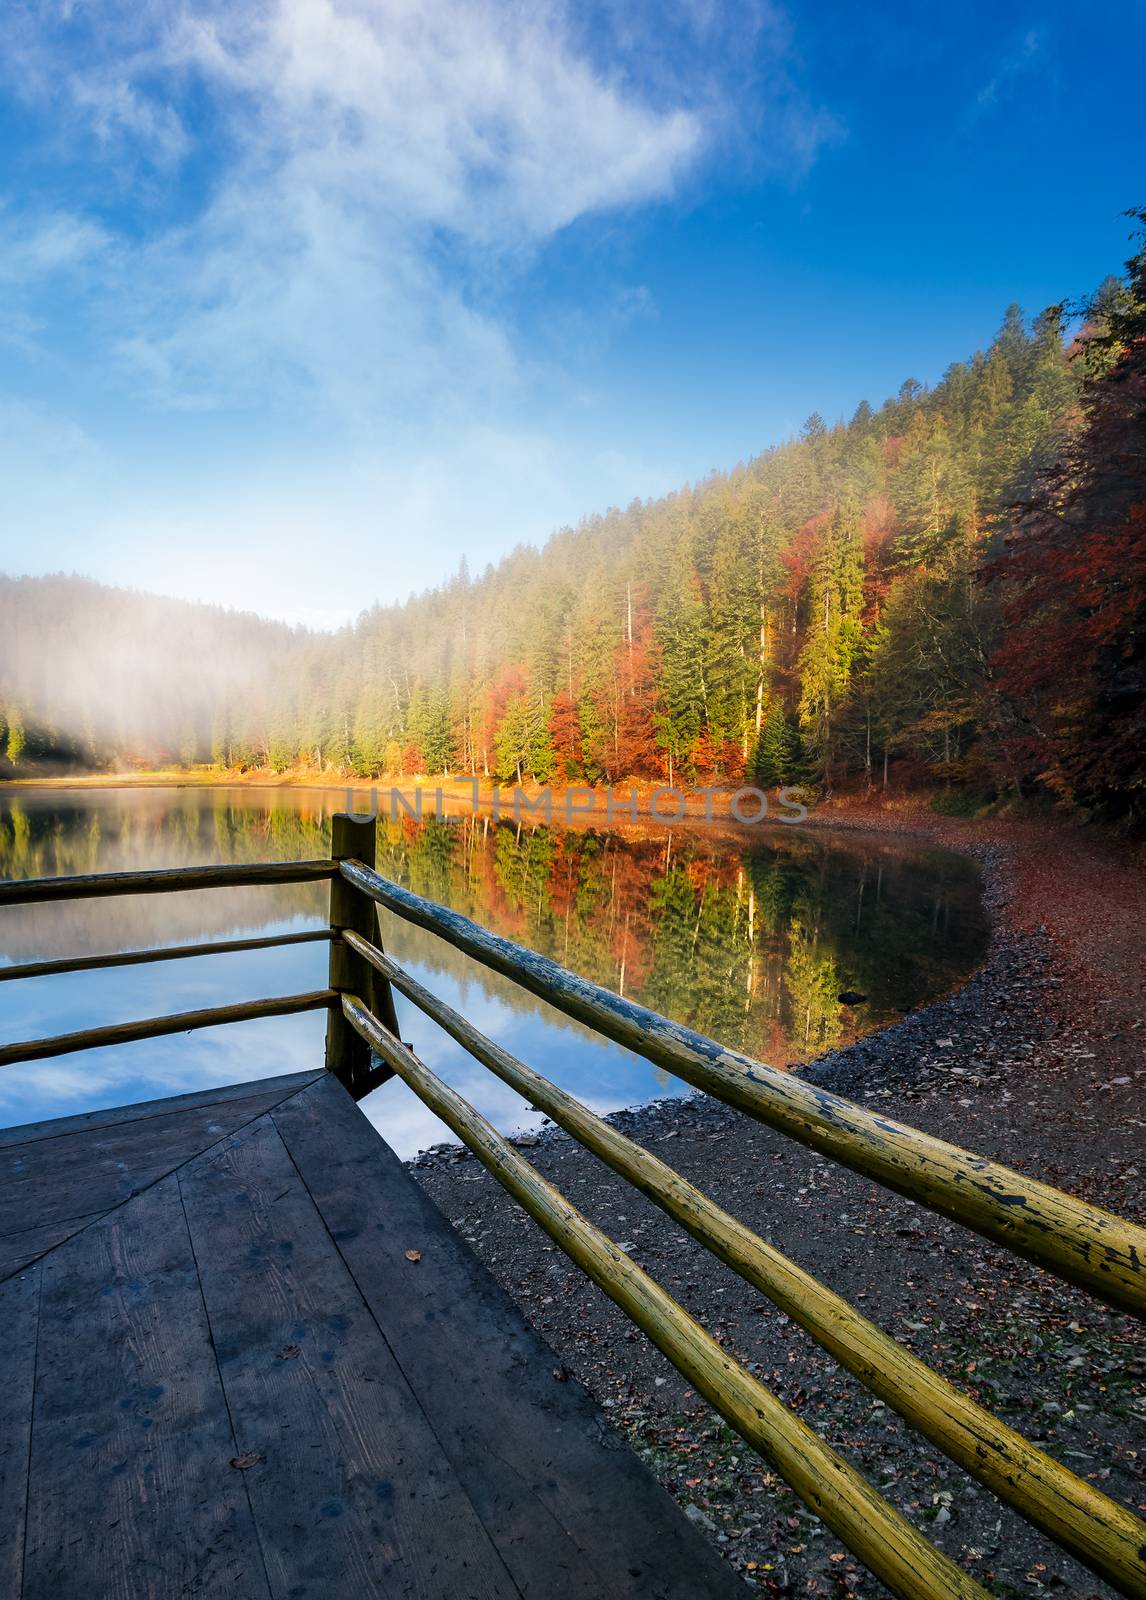 wooden pierce fence on a lake in fog by Pellinni